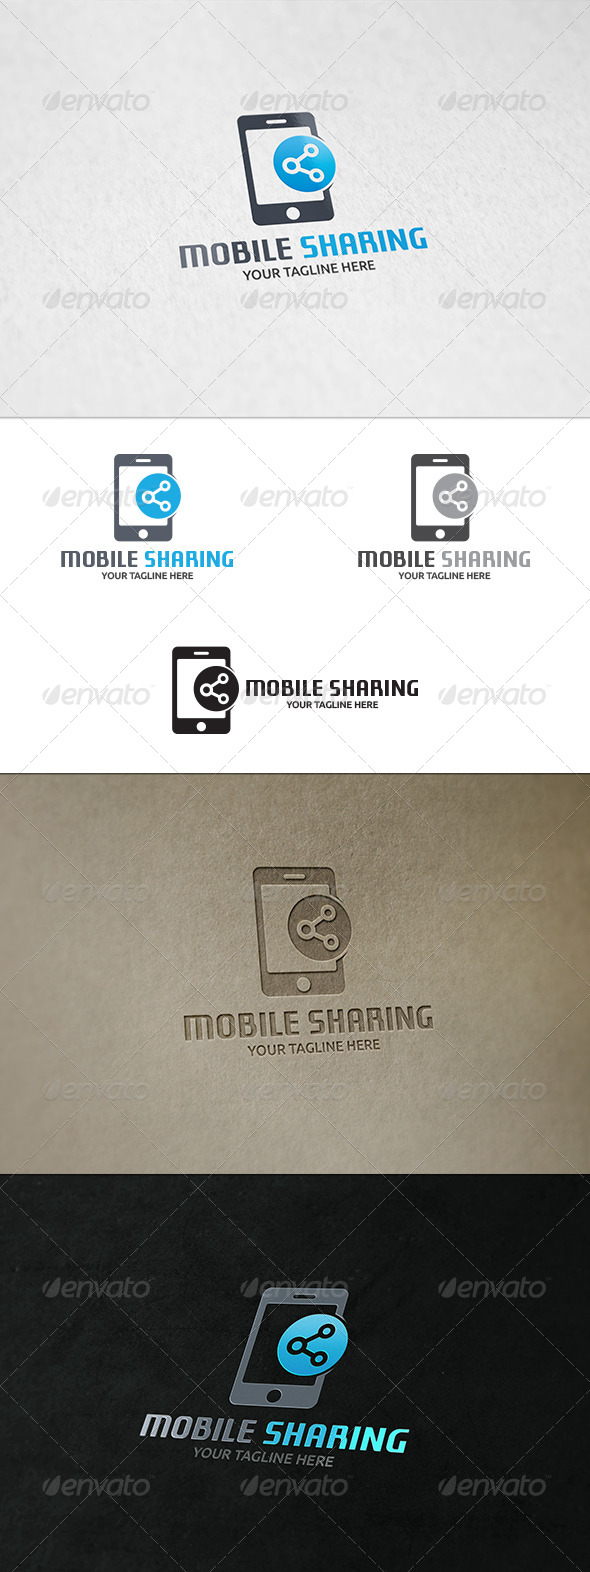 Mobile Sharing - Logo Template